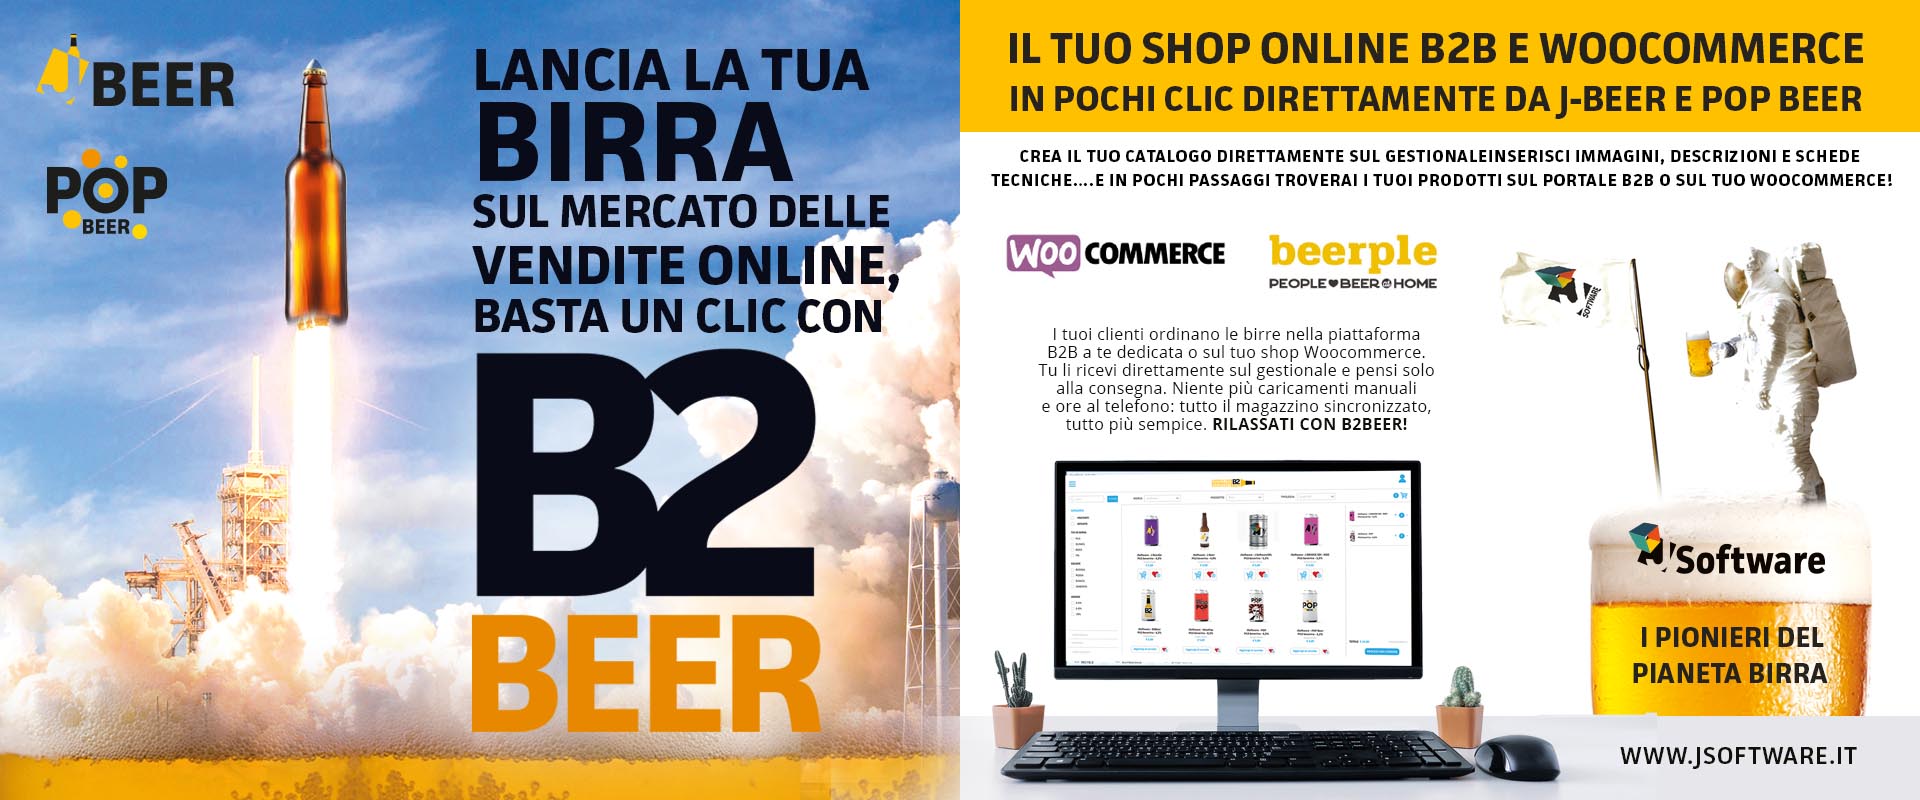 B2Beer Shop online B2B e woocommerce per birrifici e microbirrifici